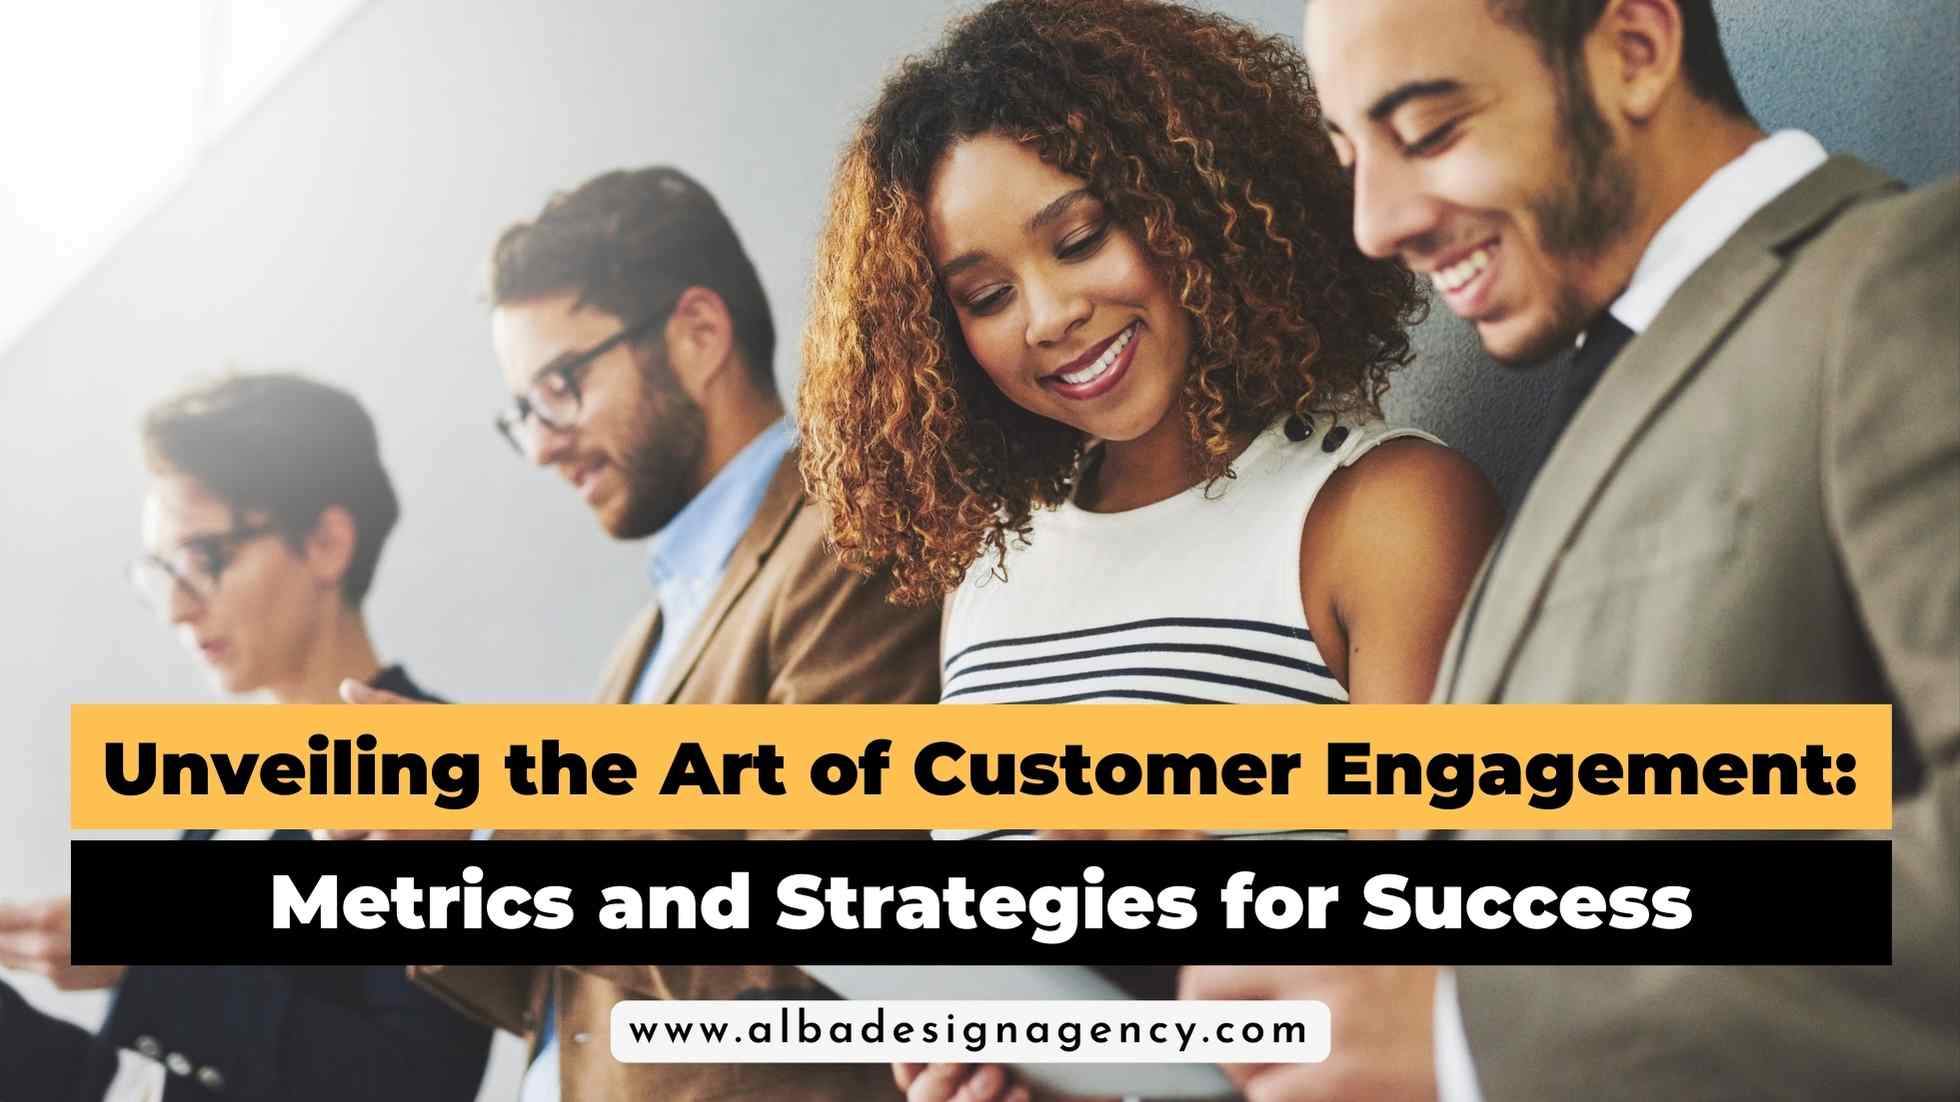 Customer engagement metrics